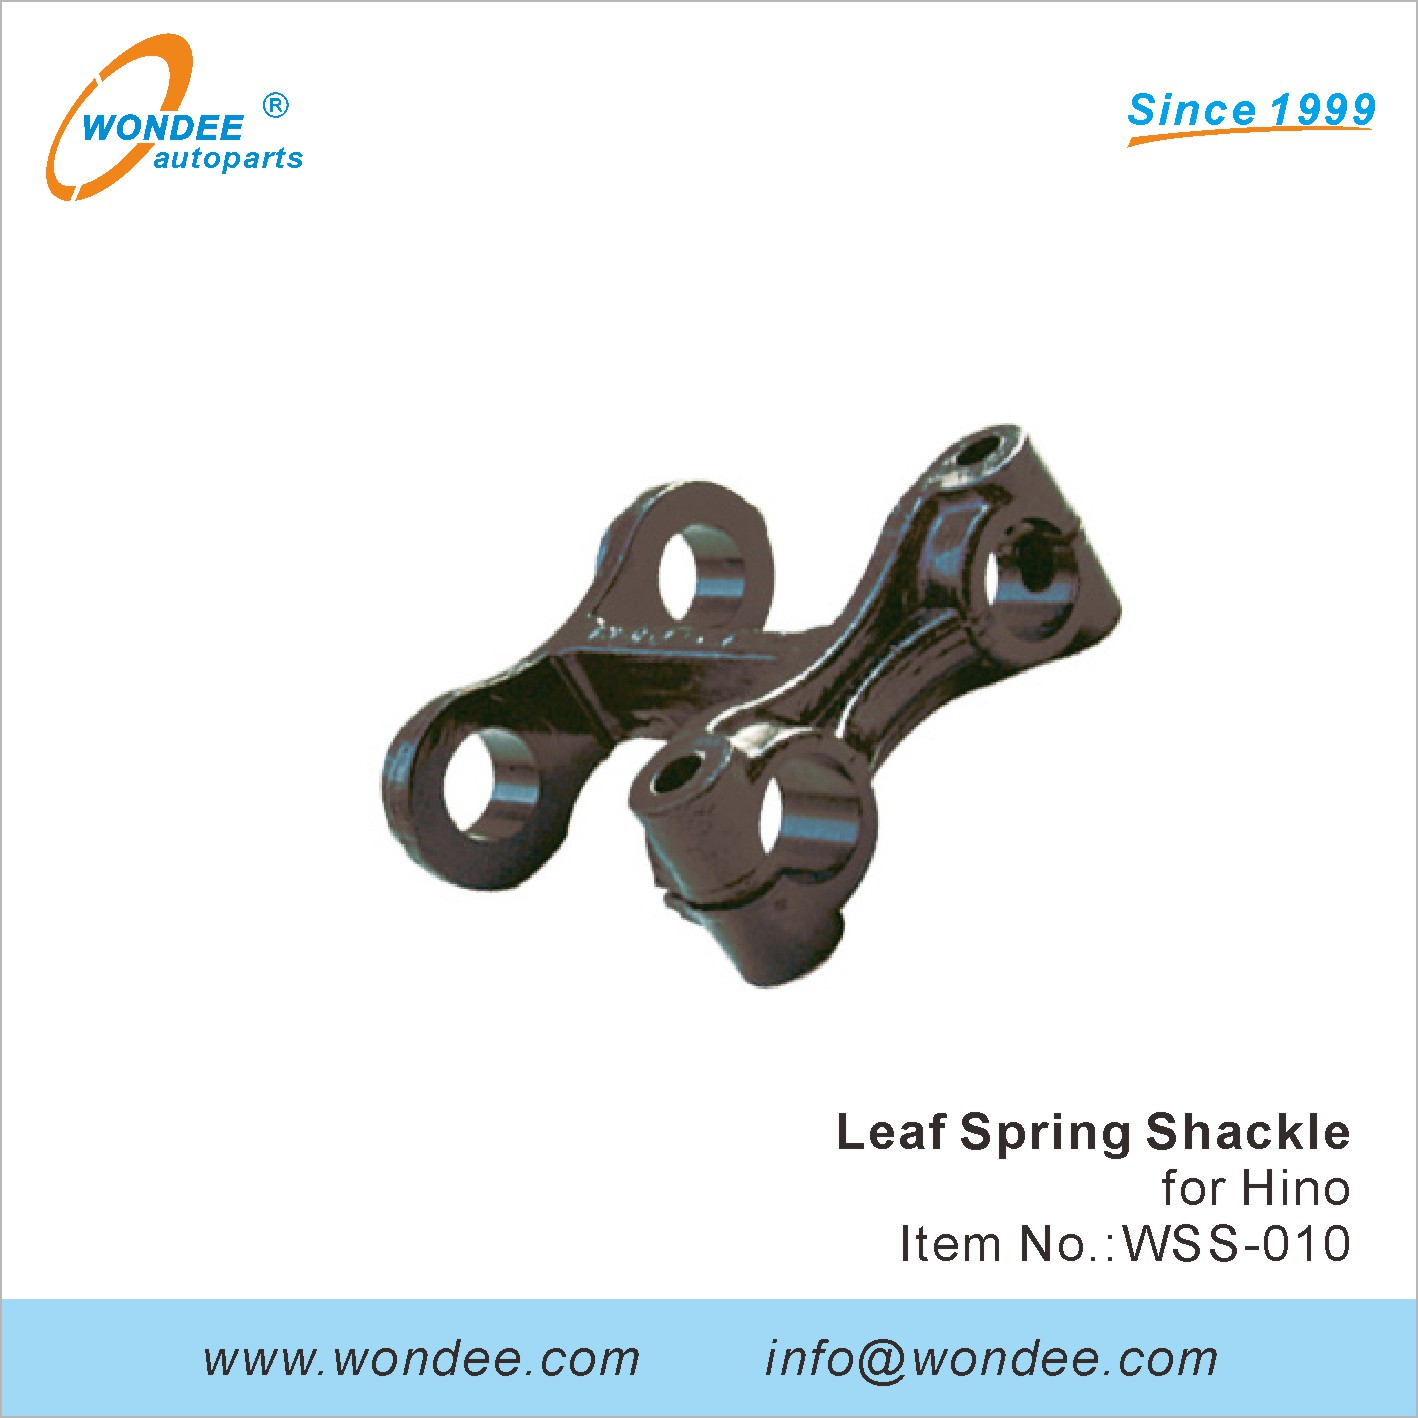 WONDEE leaf spring shackle (10)